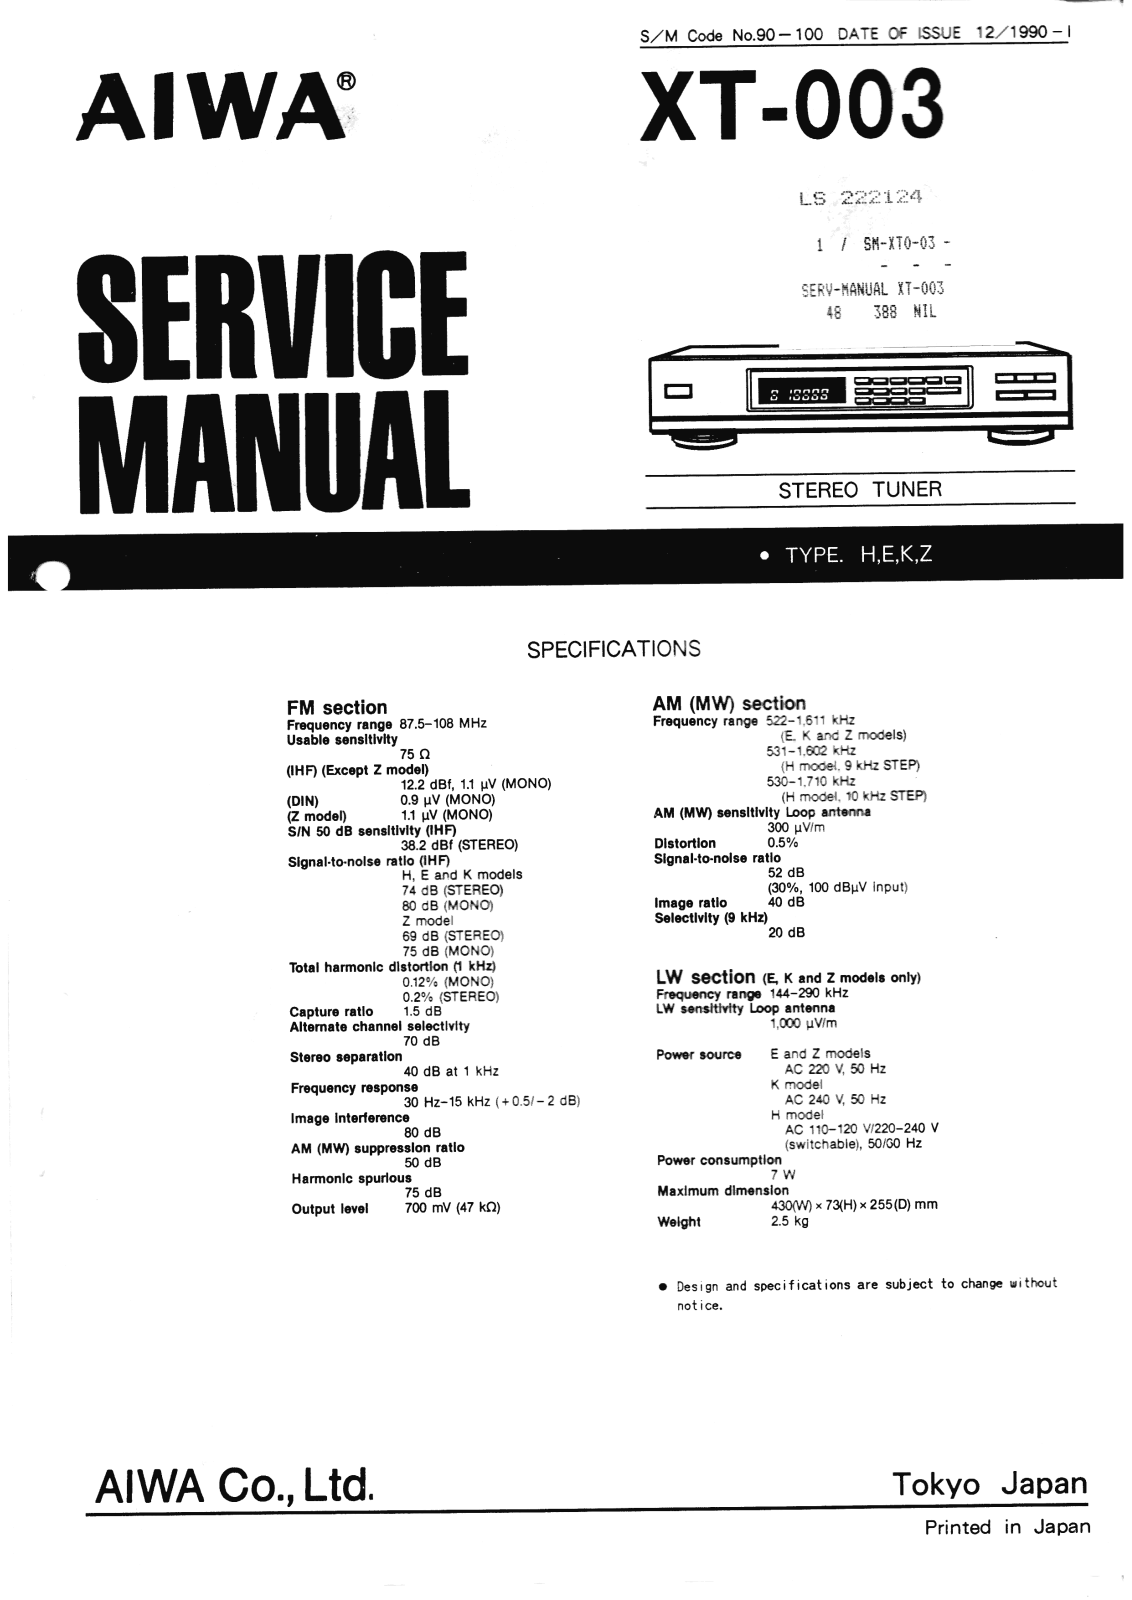 Aiwa XT-003 Service Manual